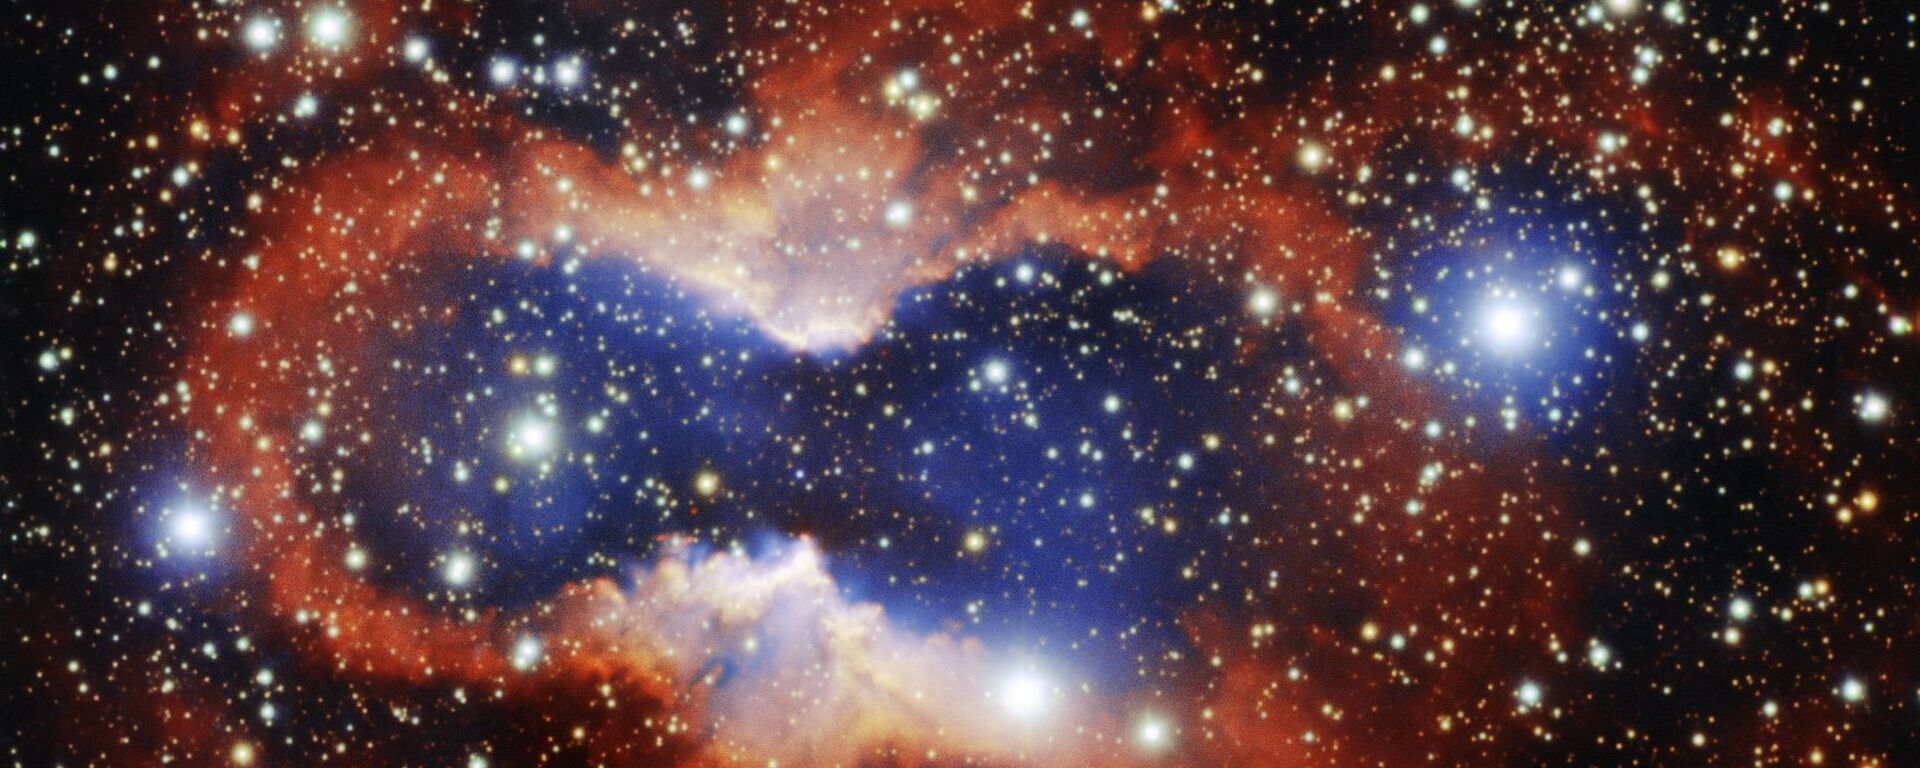 La nebulosa planetaria CVMP 1 - Sputnik Mundo, 1920, 27.02.2020